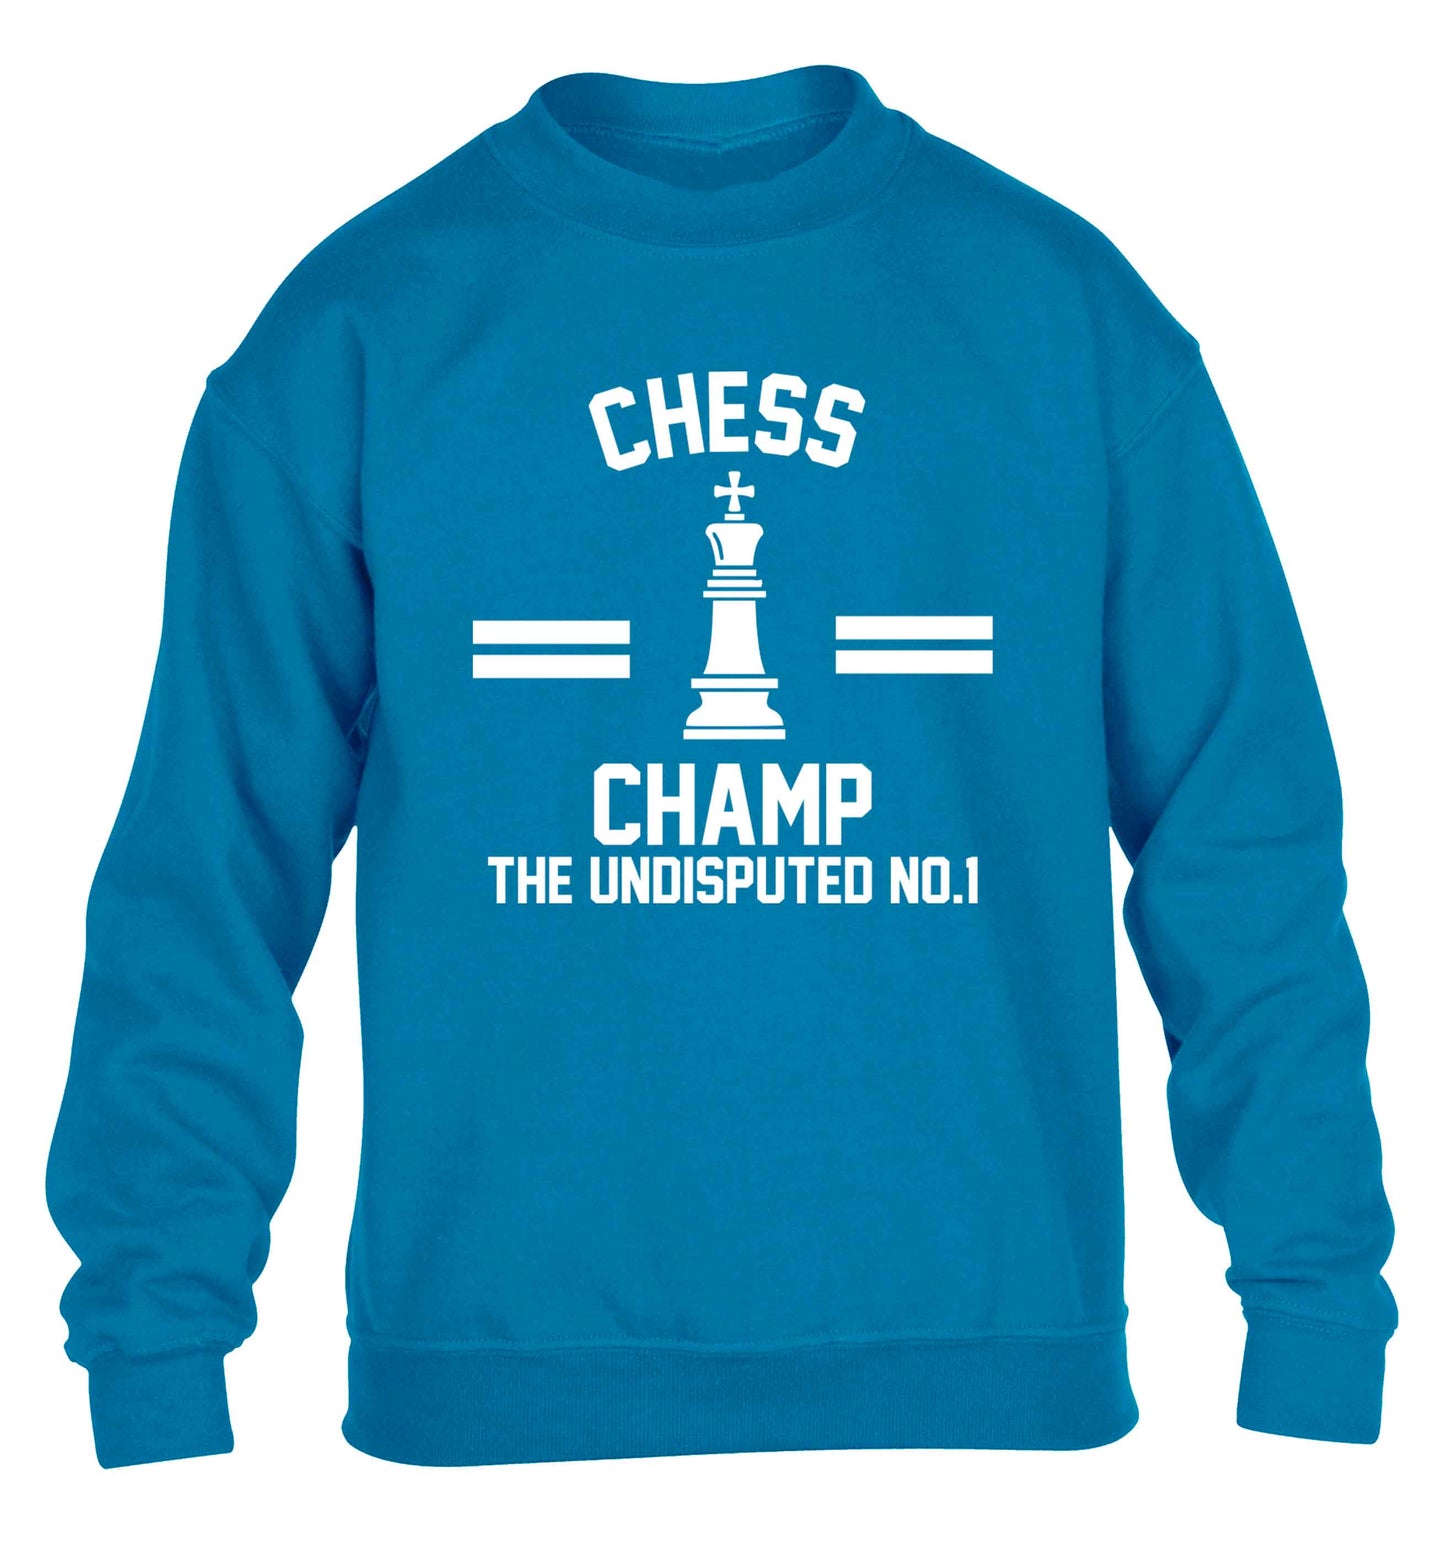 Undisputed chess championship no.1  children's blue sweater 12-13 Years